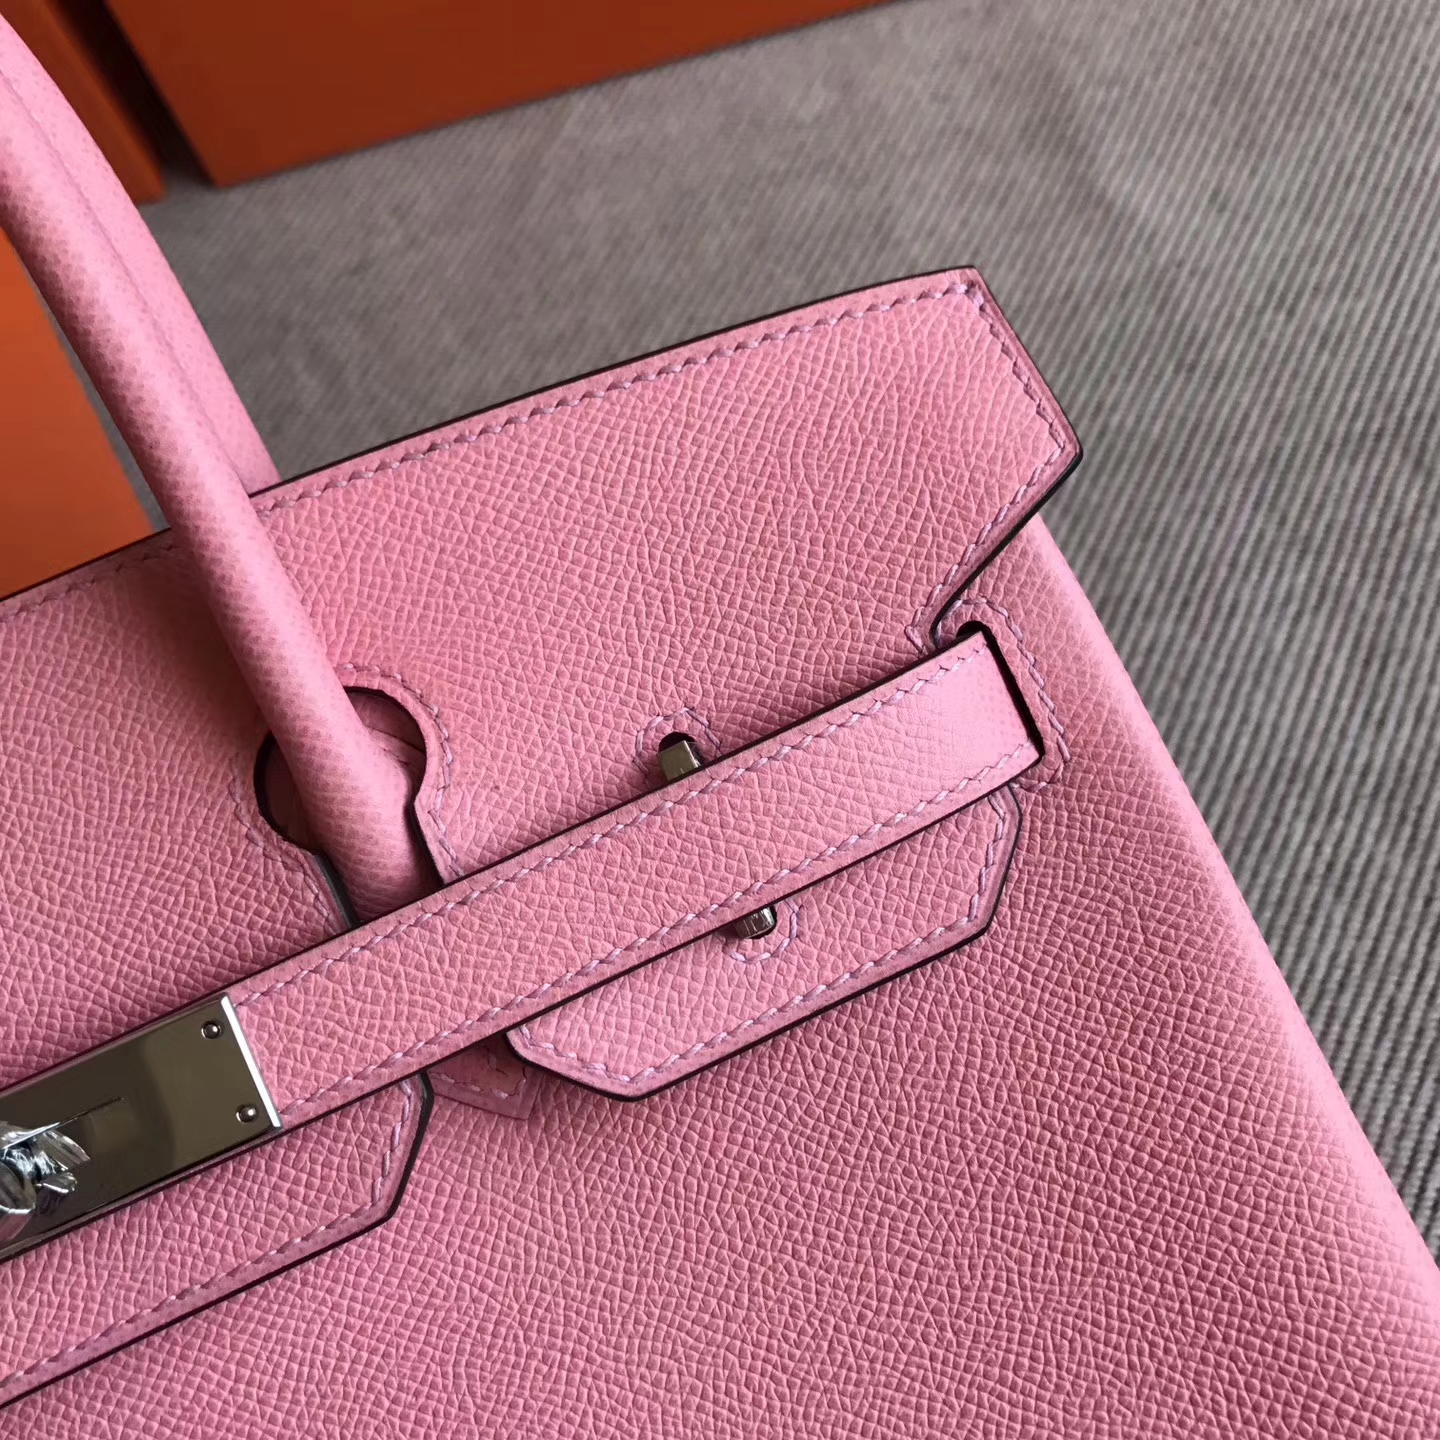 Beautiful Hermes Epsom Calfskin Leather Birkin Bag30cm in 1Q Rose Confetti